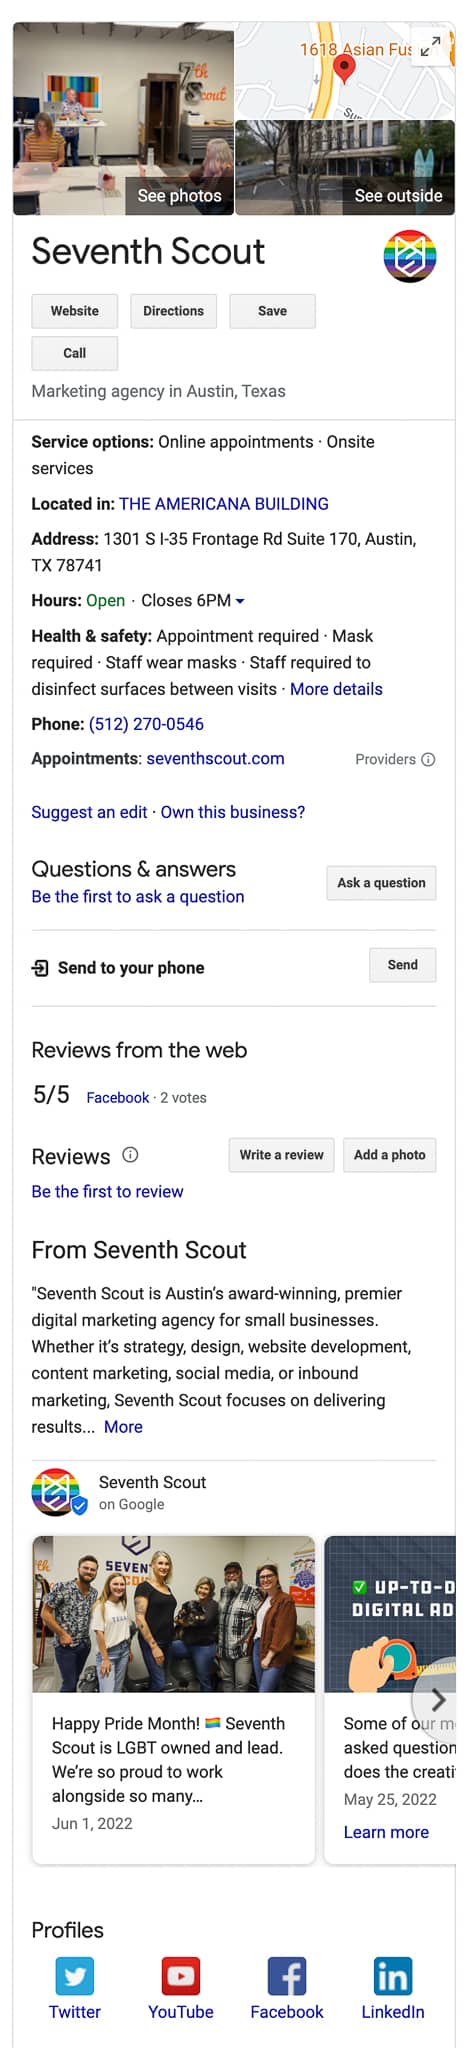 Seventh Scout Google Business Profile